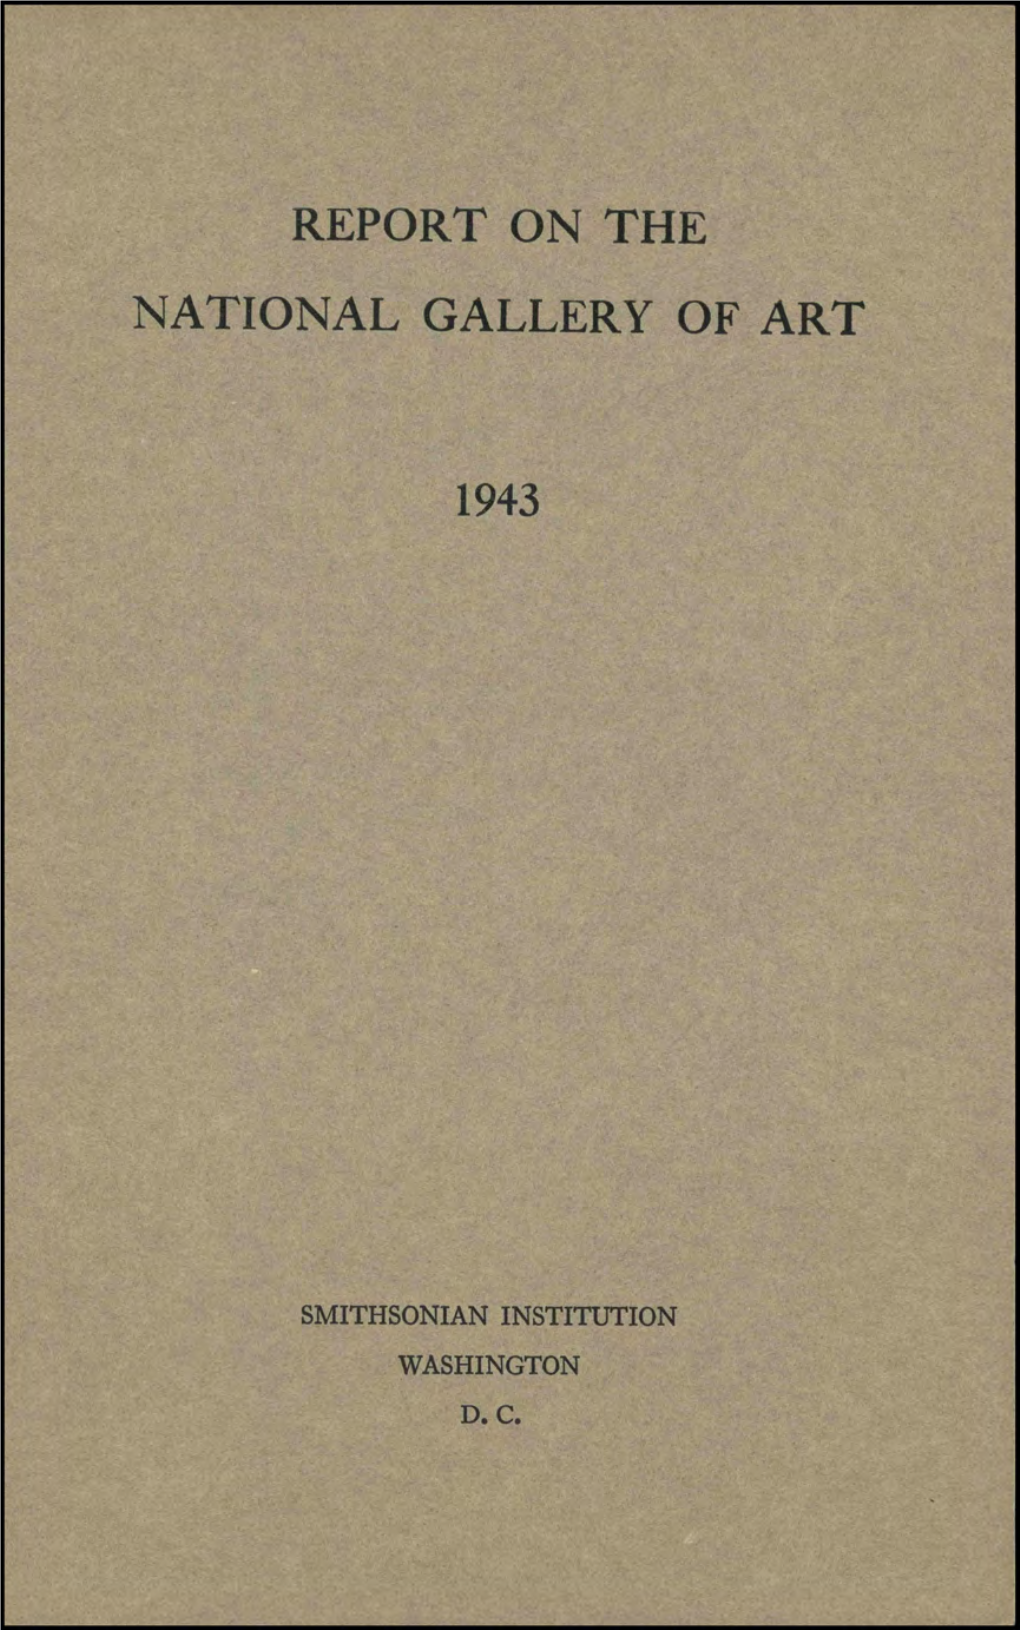 Annual Report 1943